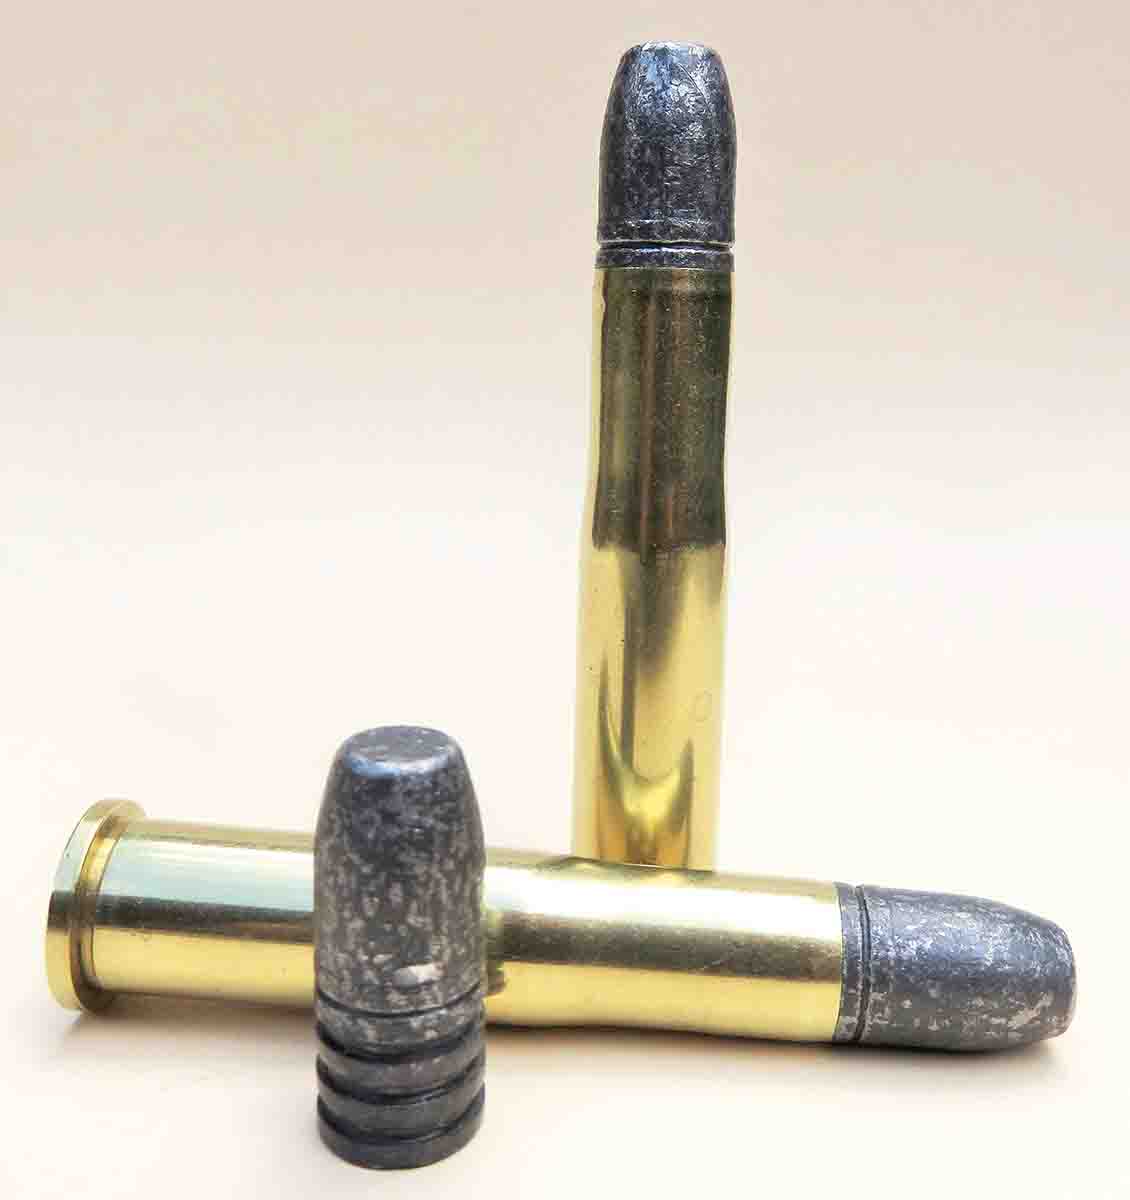 44 Special black powder bullet - The Firing Line Forums